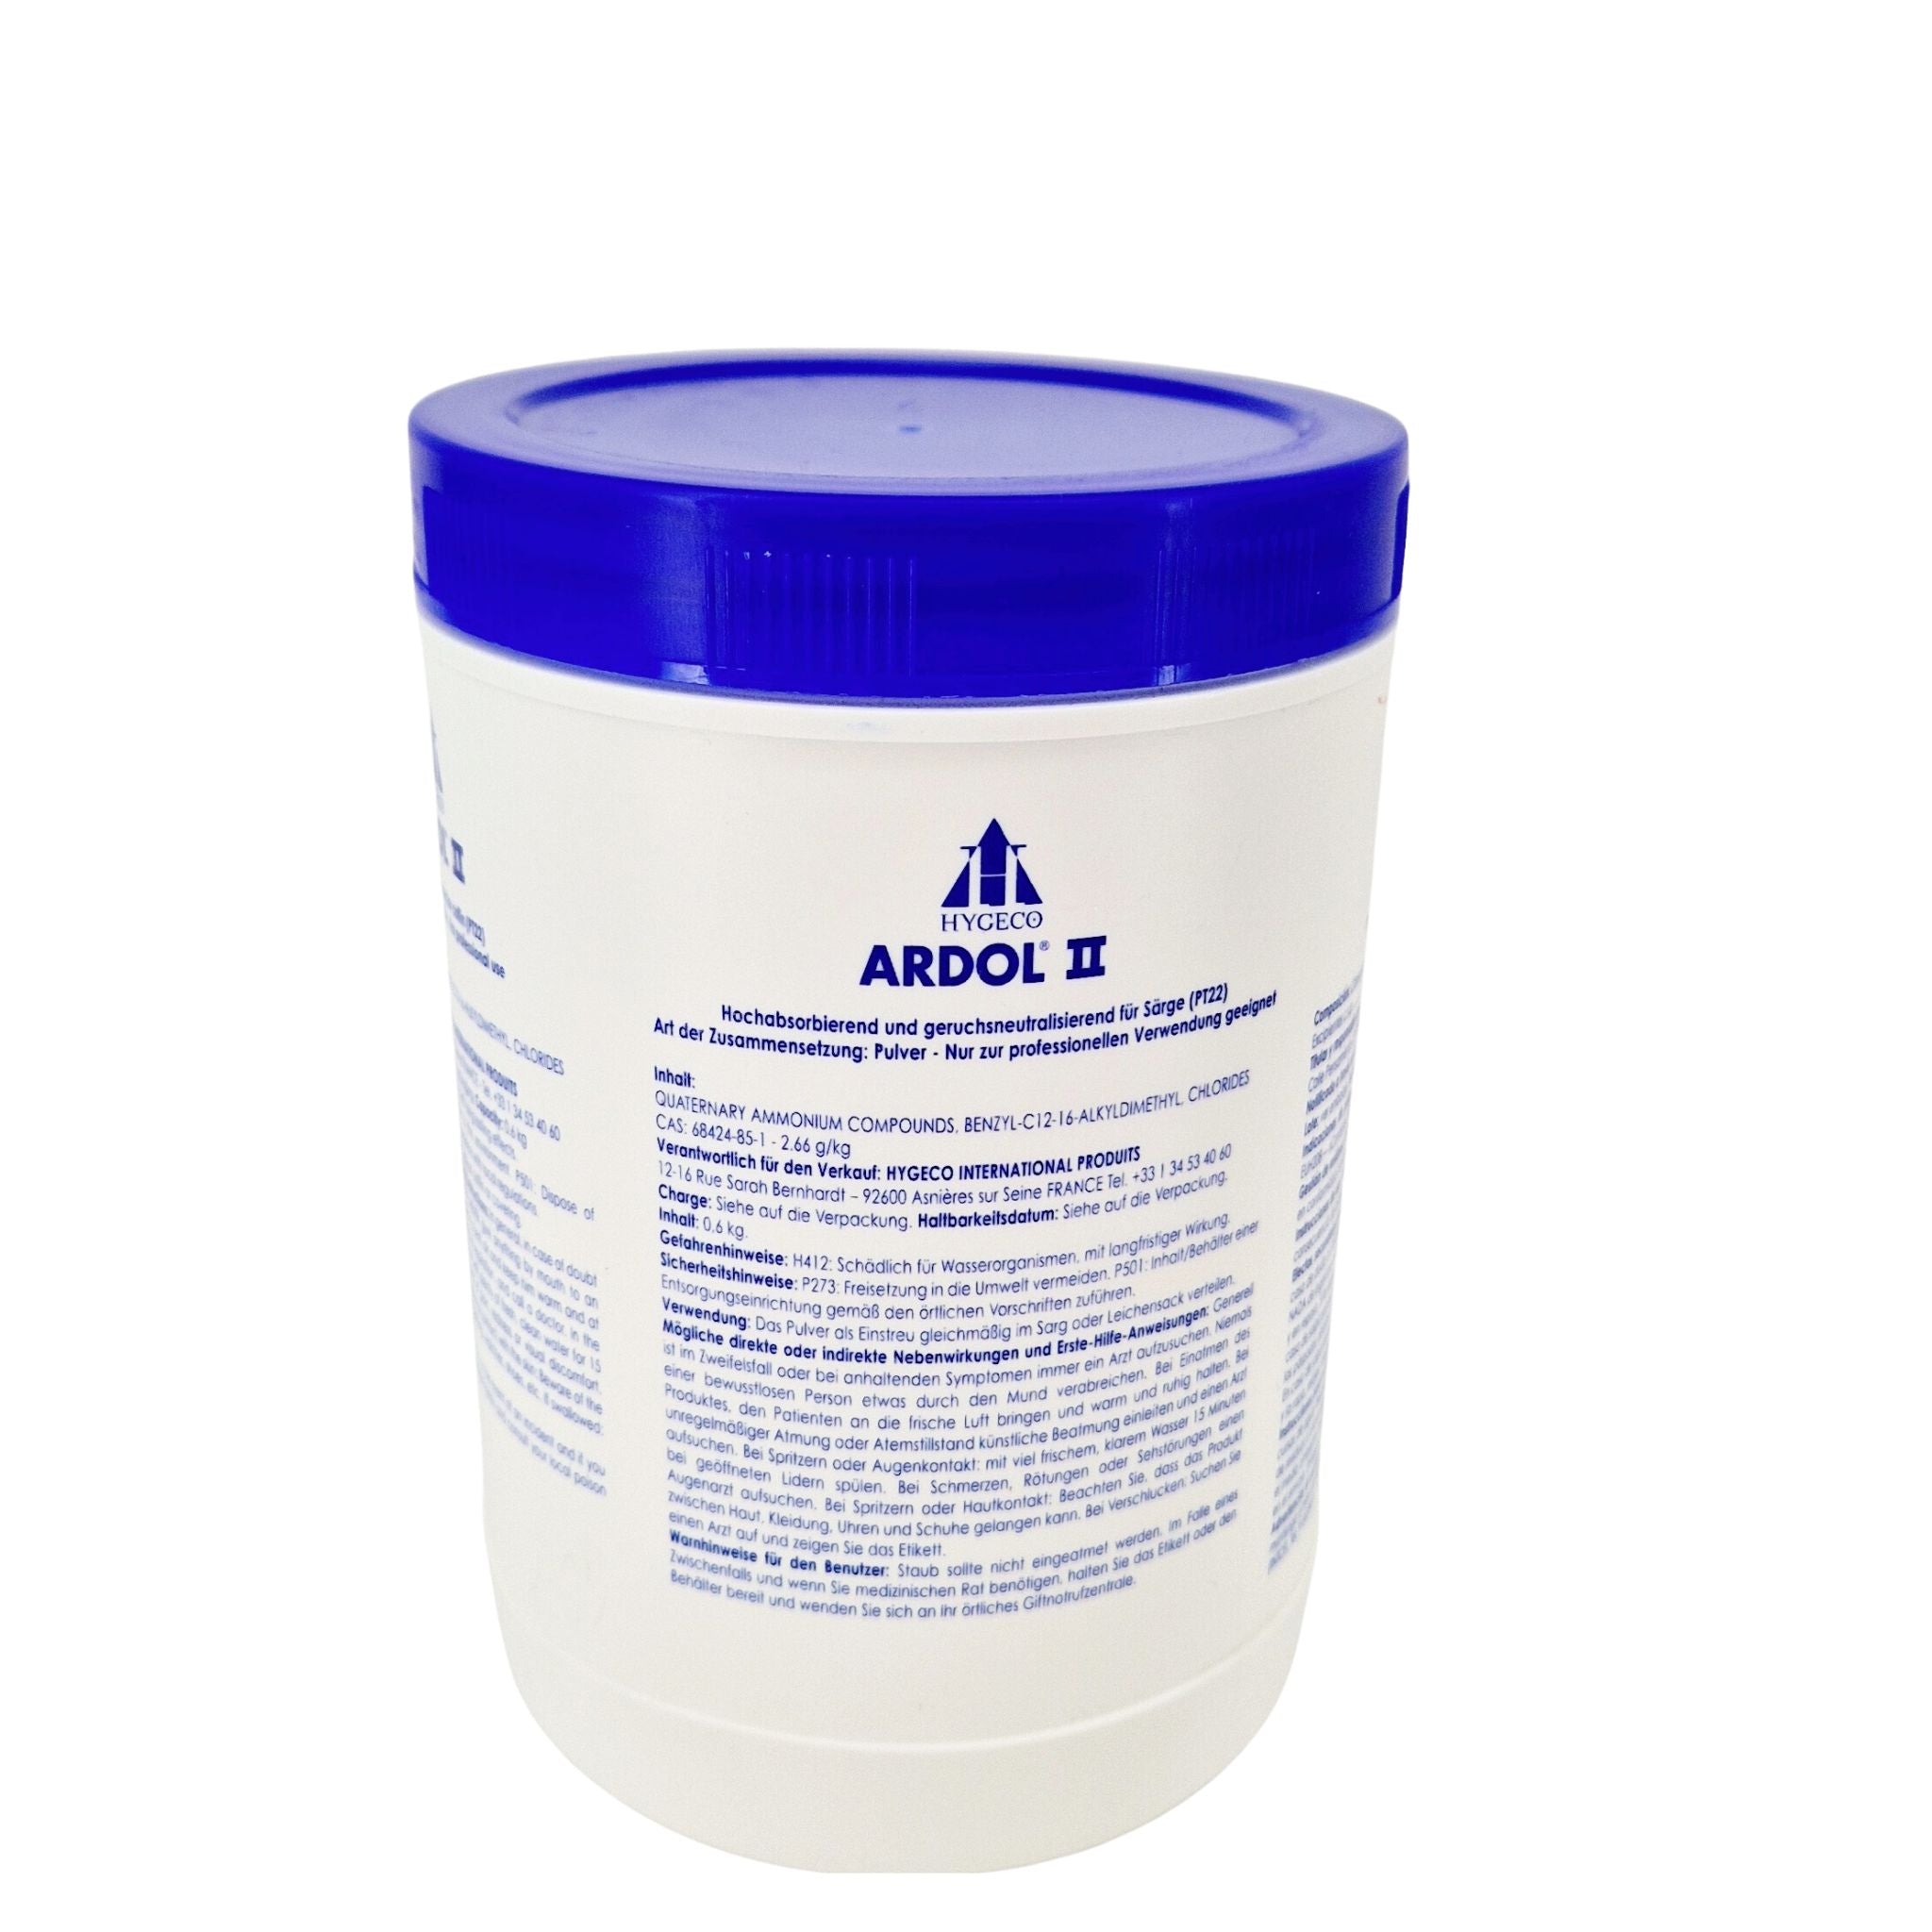 Ardol II coffin litter for odor control